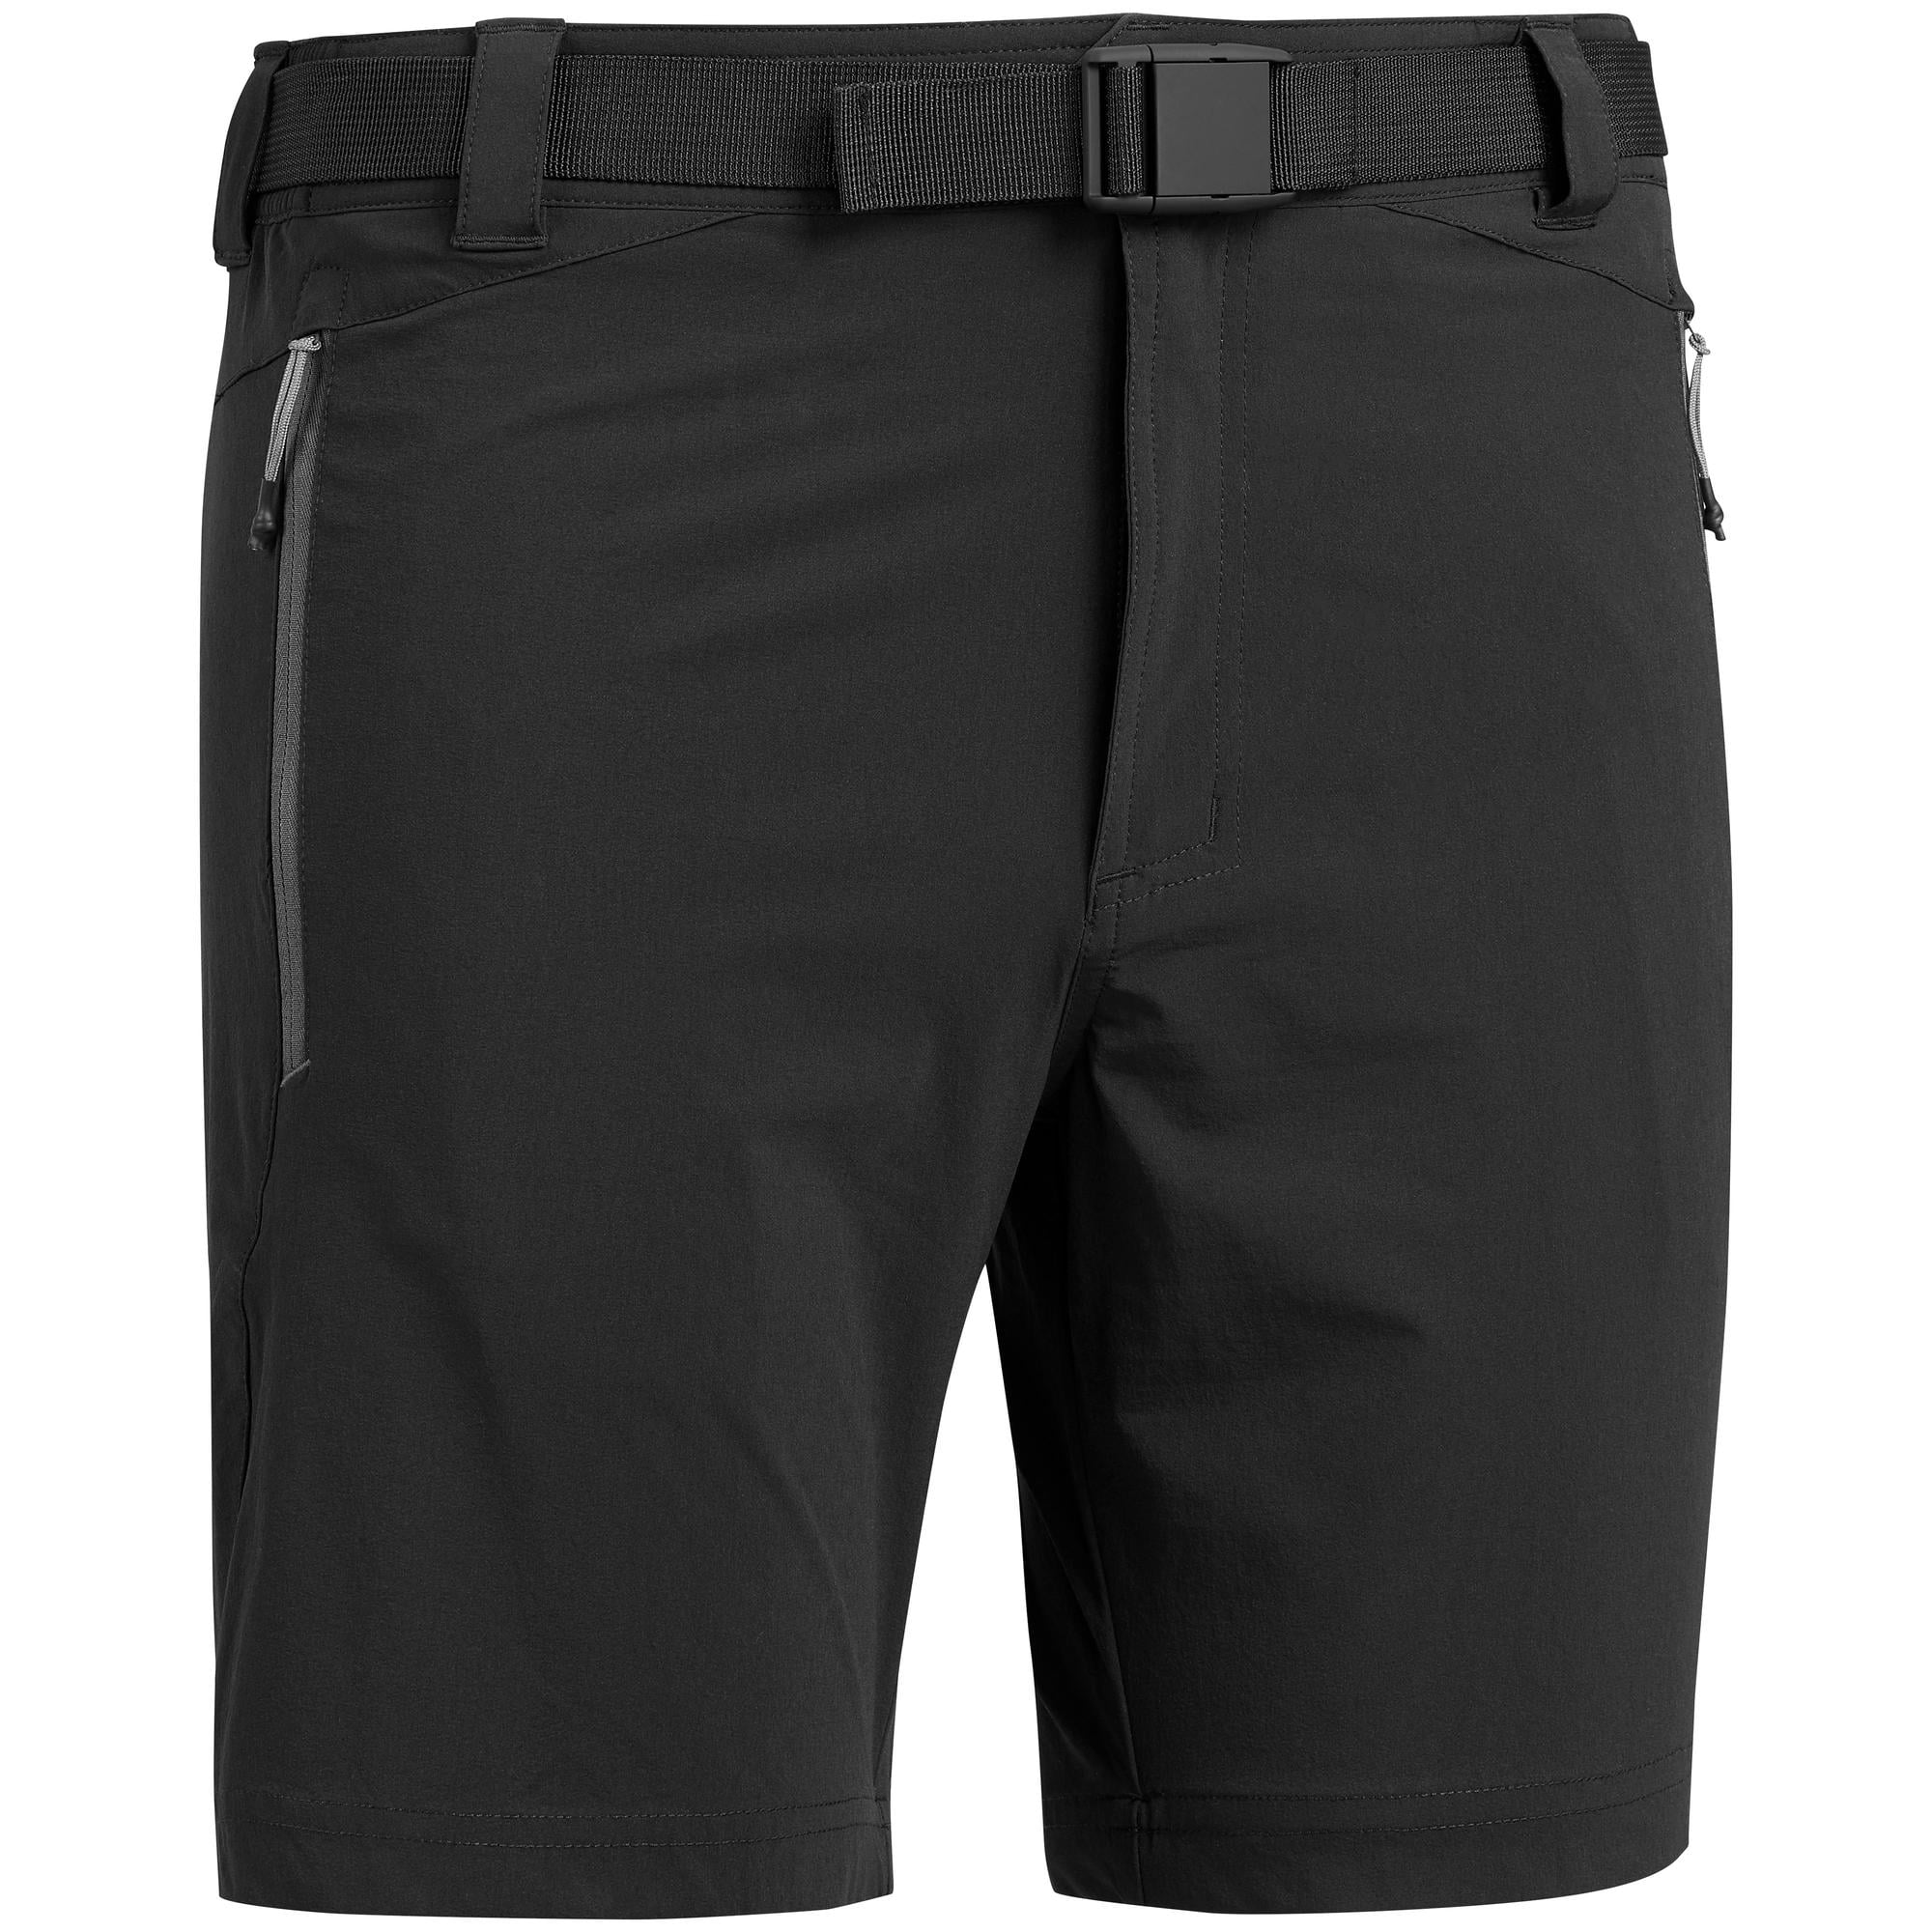 decathlon men's shorts